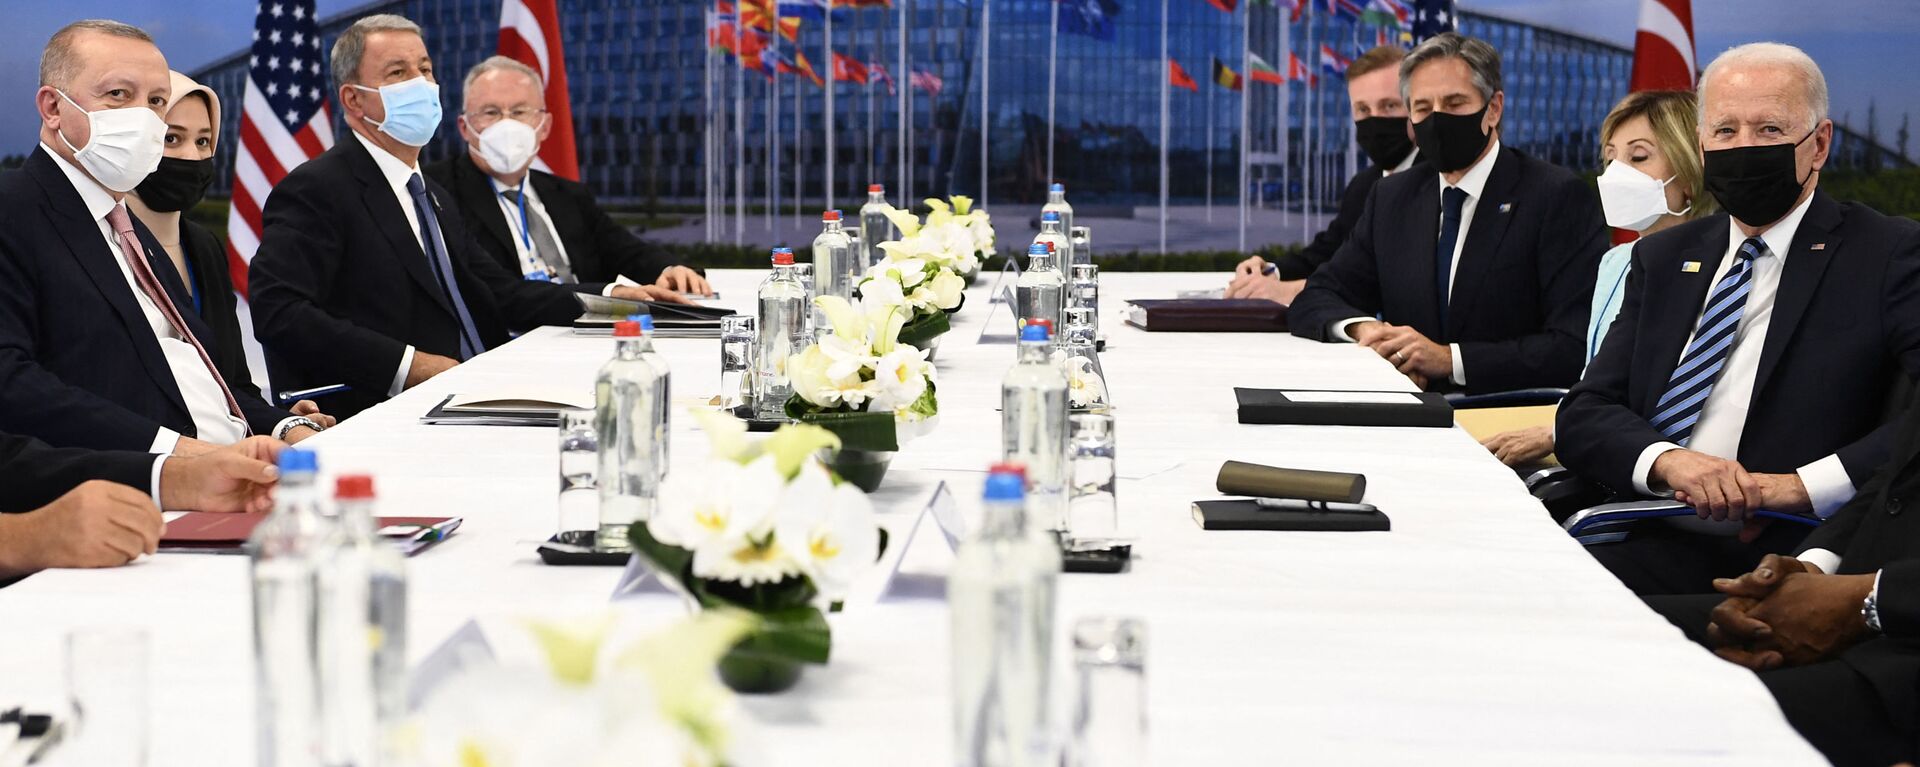 Turkey's President Recep Tayyip Erdogan (L) and US President Joe Biden (R) attend a bilateral meeting on the sidelines of the NATO summit at the North Atlantic Treaty Organization (NATO) headquarters in Brussels on June 14, 2021. - Sputnik International, 1920, 15.06.2021